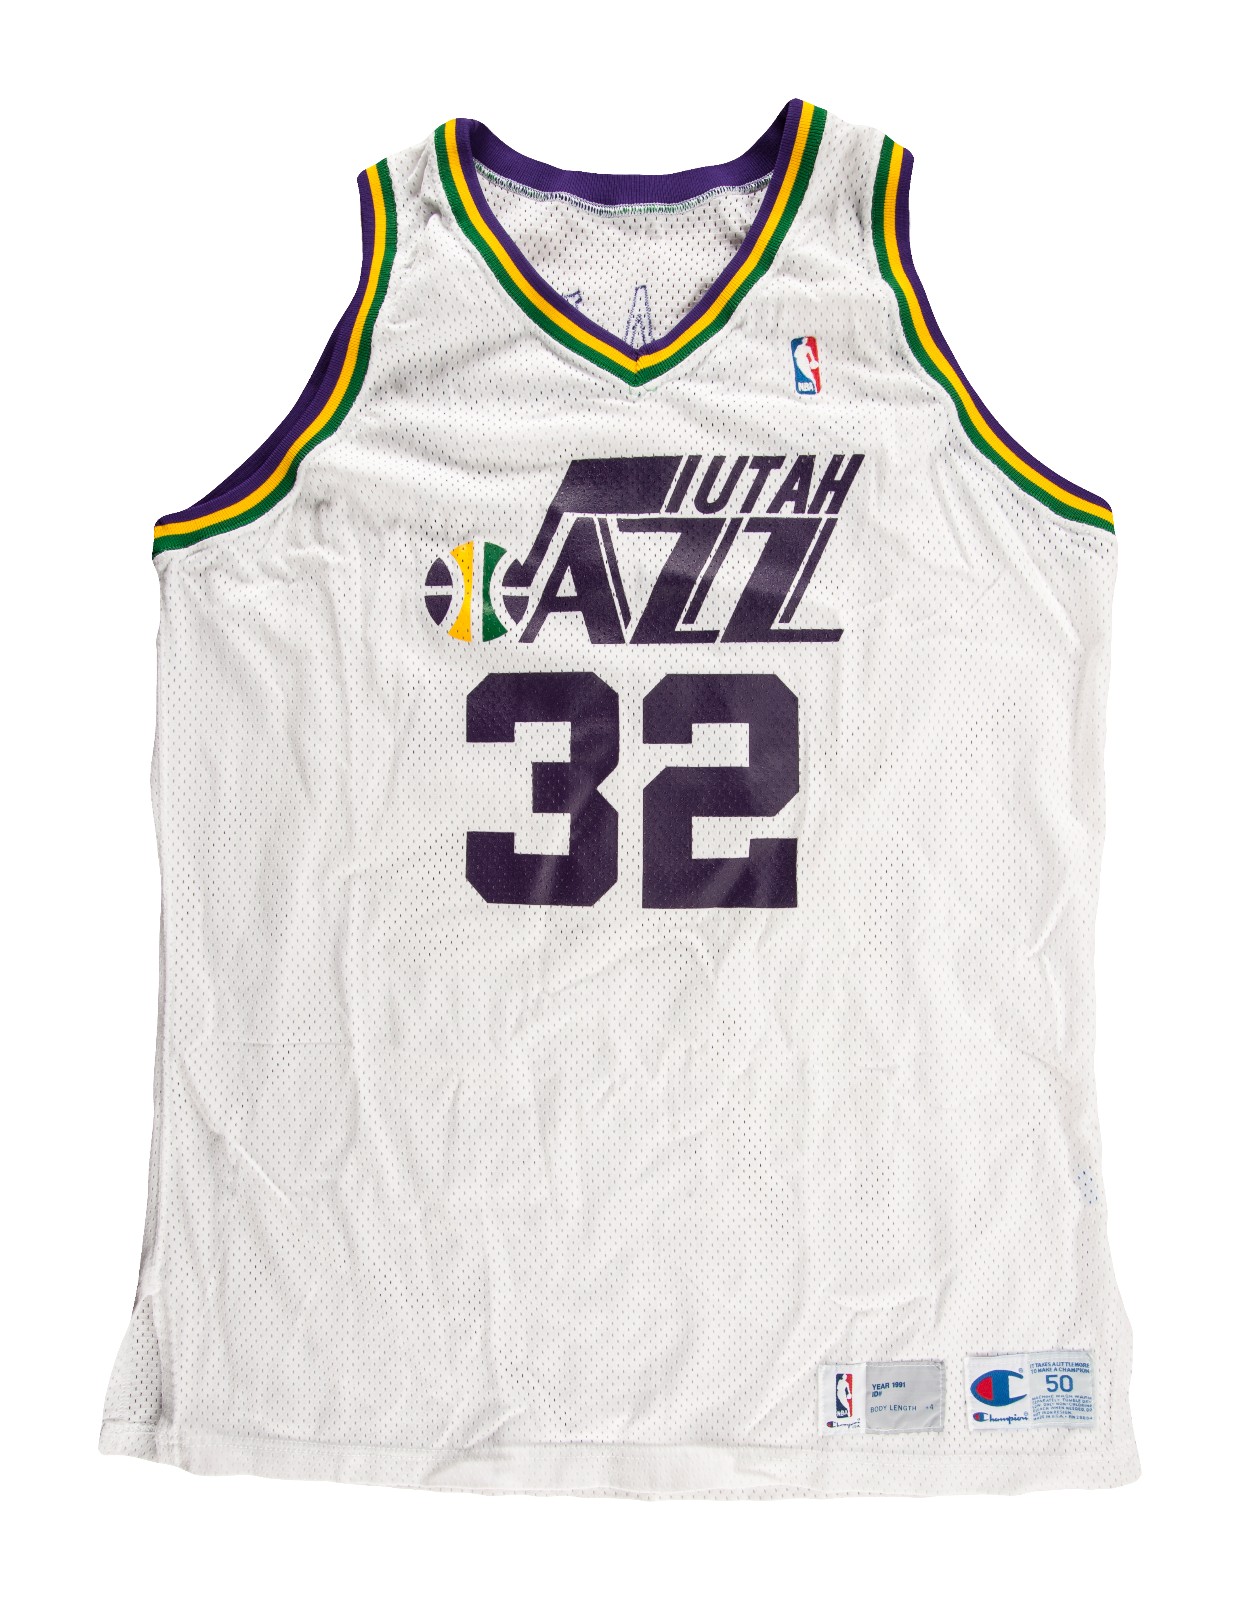 1996-2003 Utah Jazz uniforms by Chenglor55 on DeviantArt